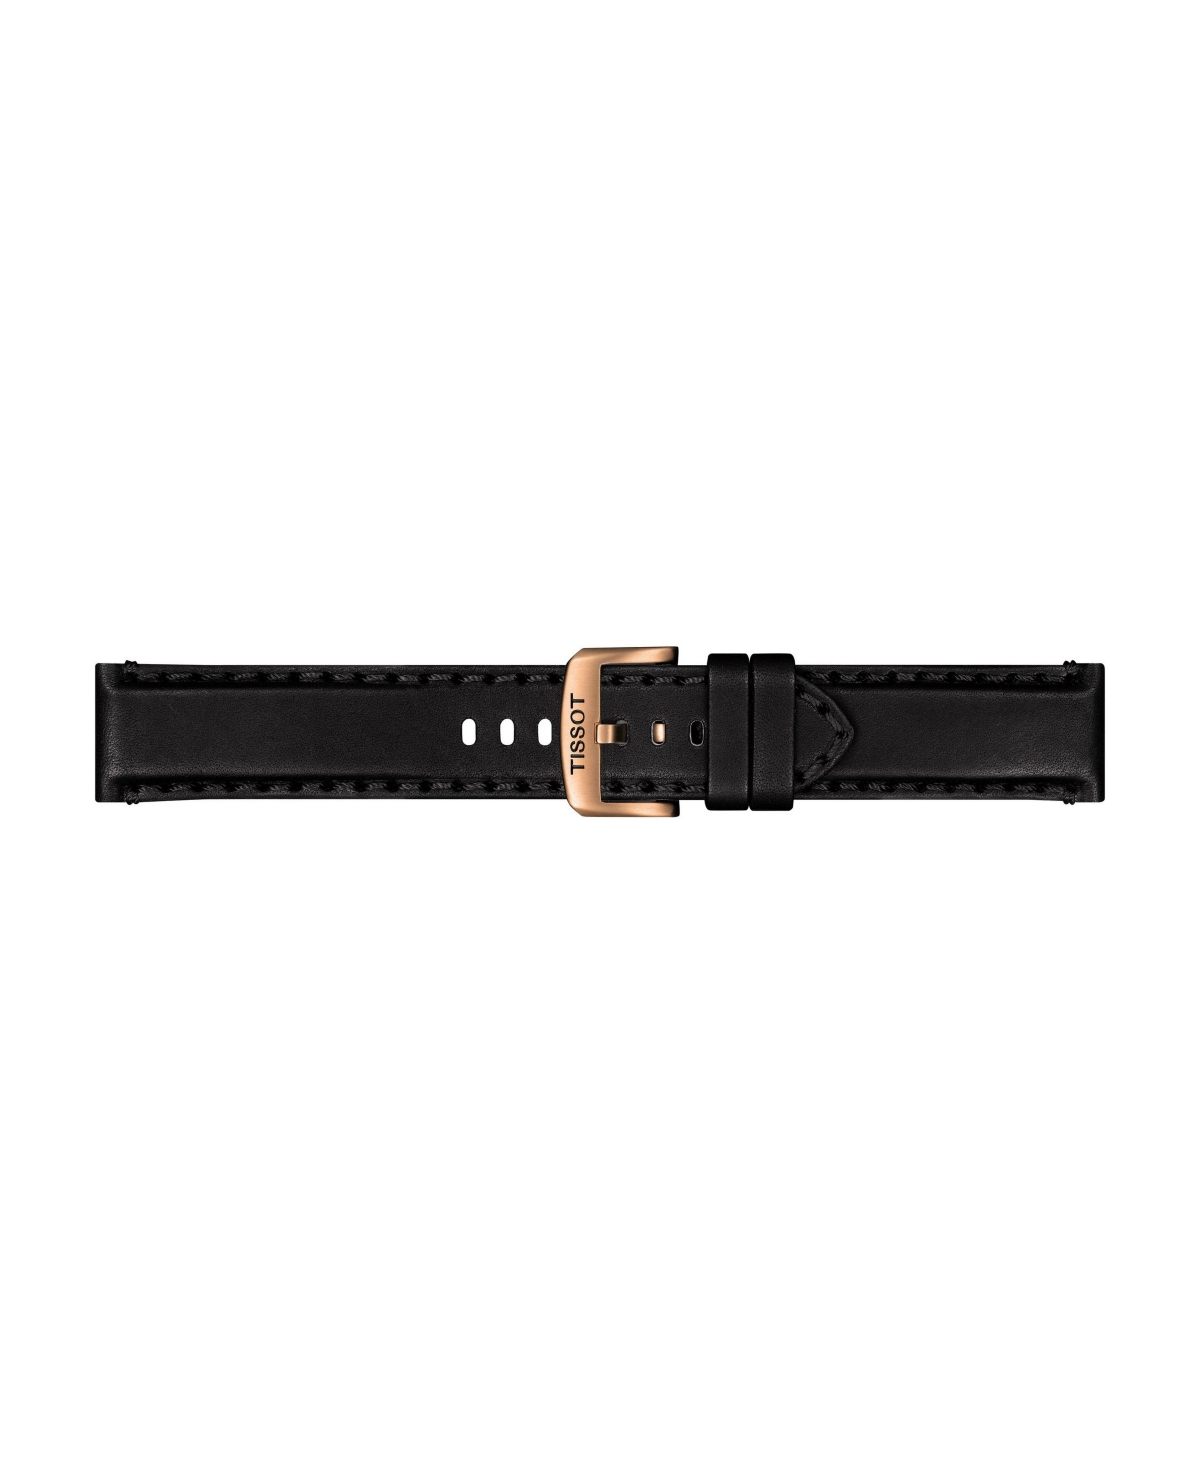 Shop Tissot Men's Swiss Chronograph Supersport T-sport Black Leather Strap Watch 46mm